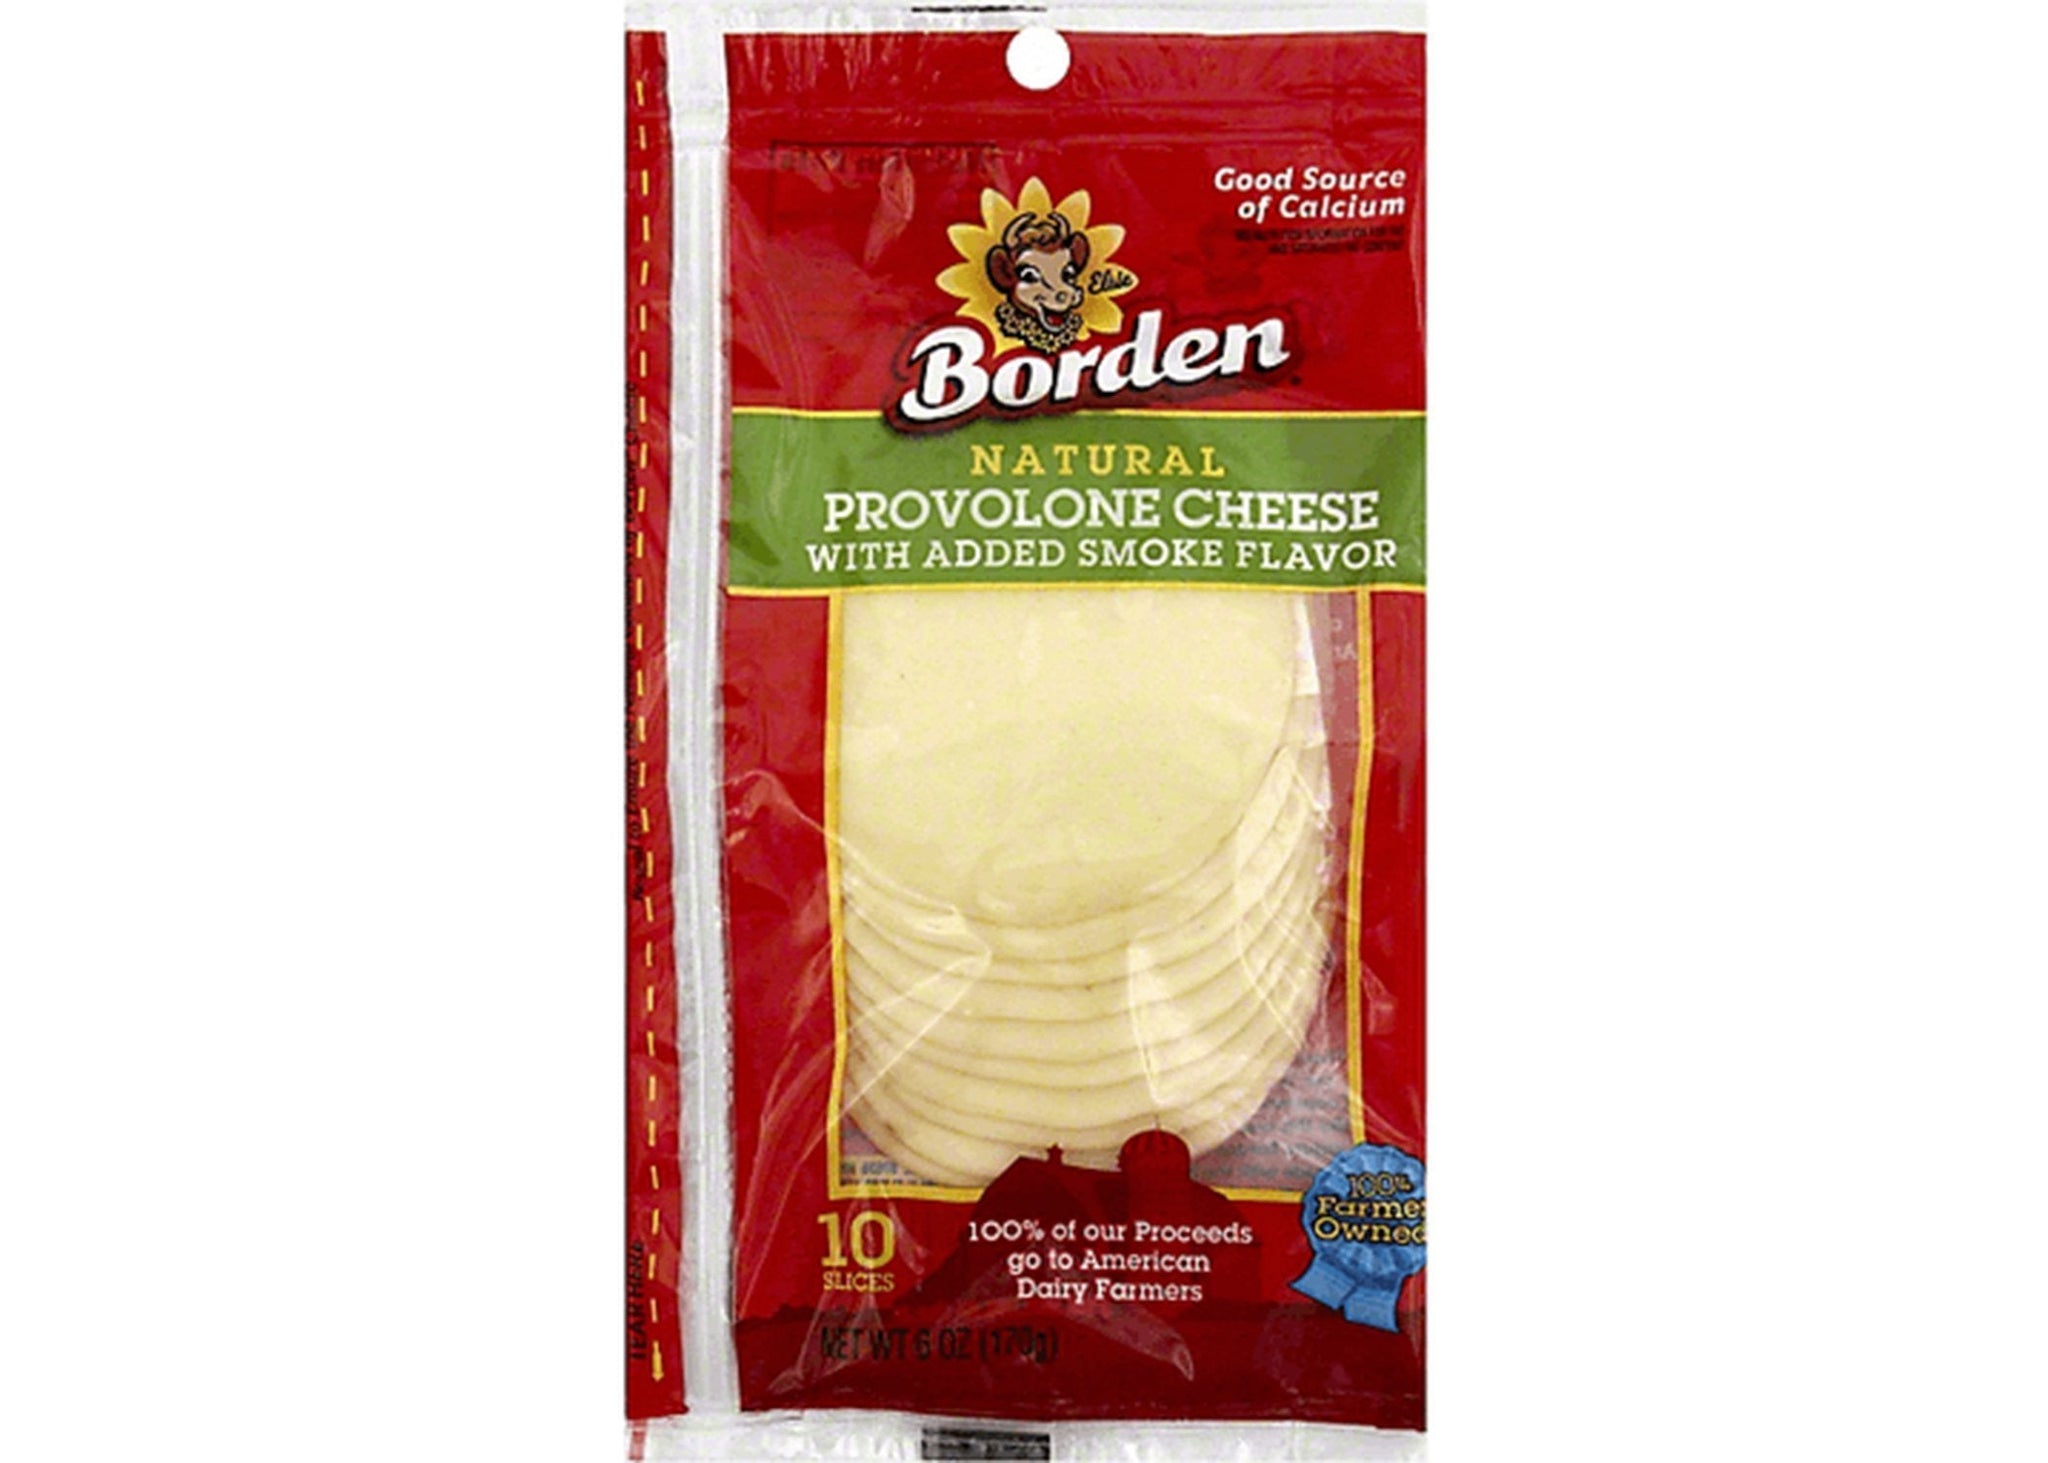 bvi>Borden Natural Provolone Cheese - 6 oz (170 g), 10 slices